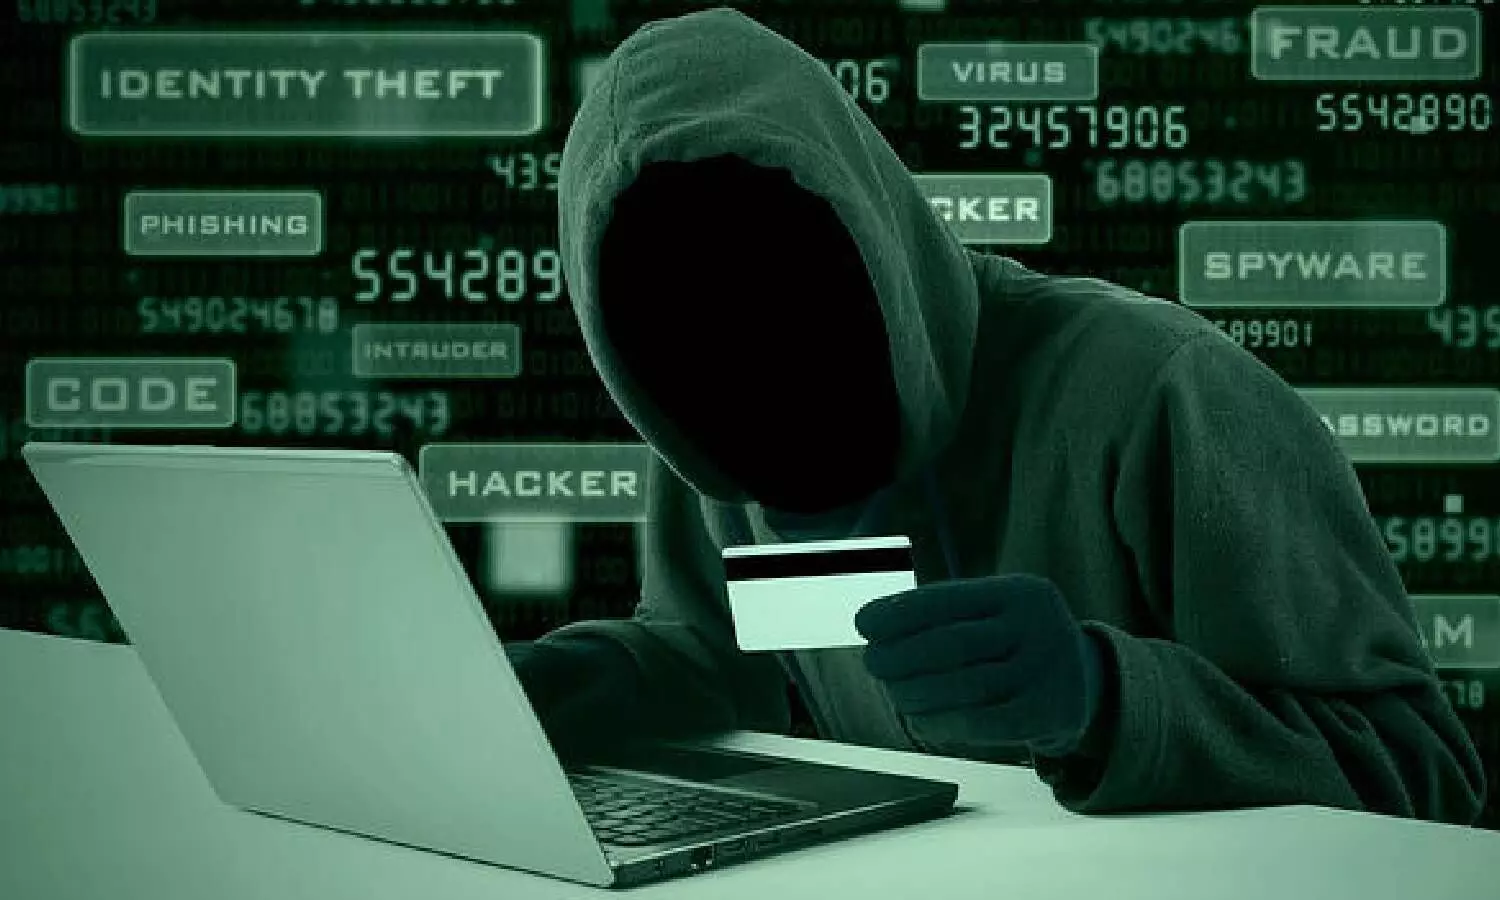 Cyberabad cyber police bust international credit card scam, arrest 7